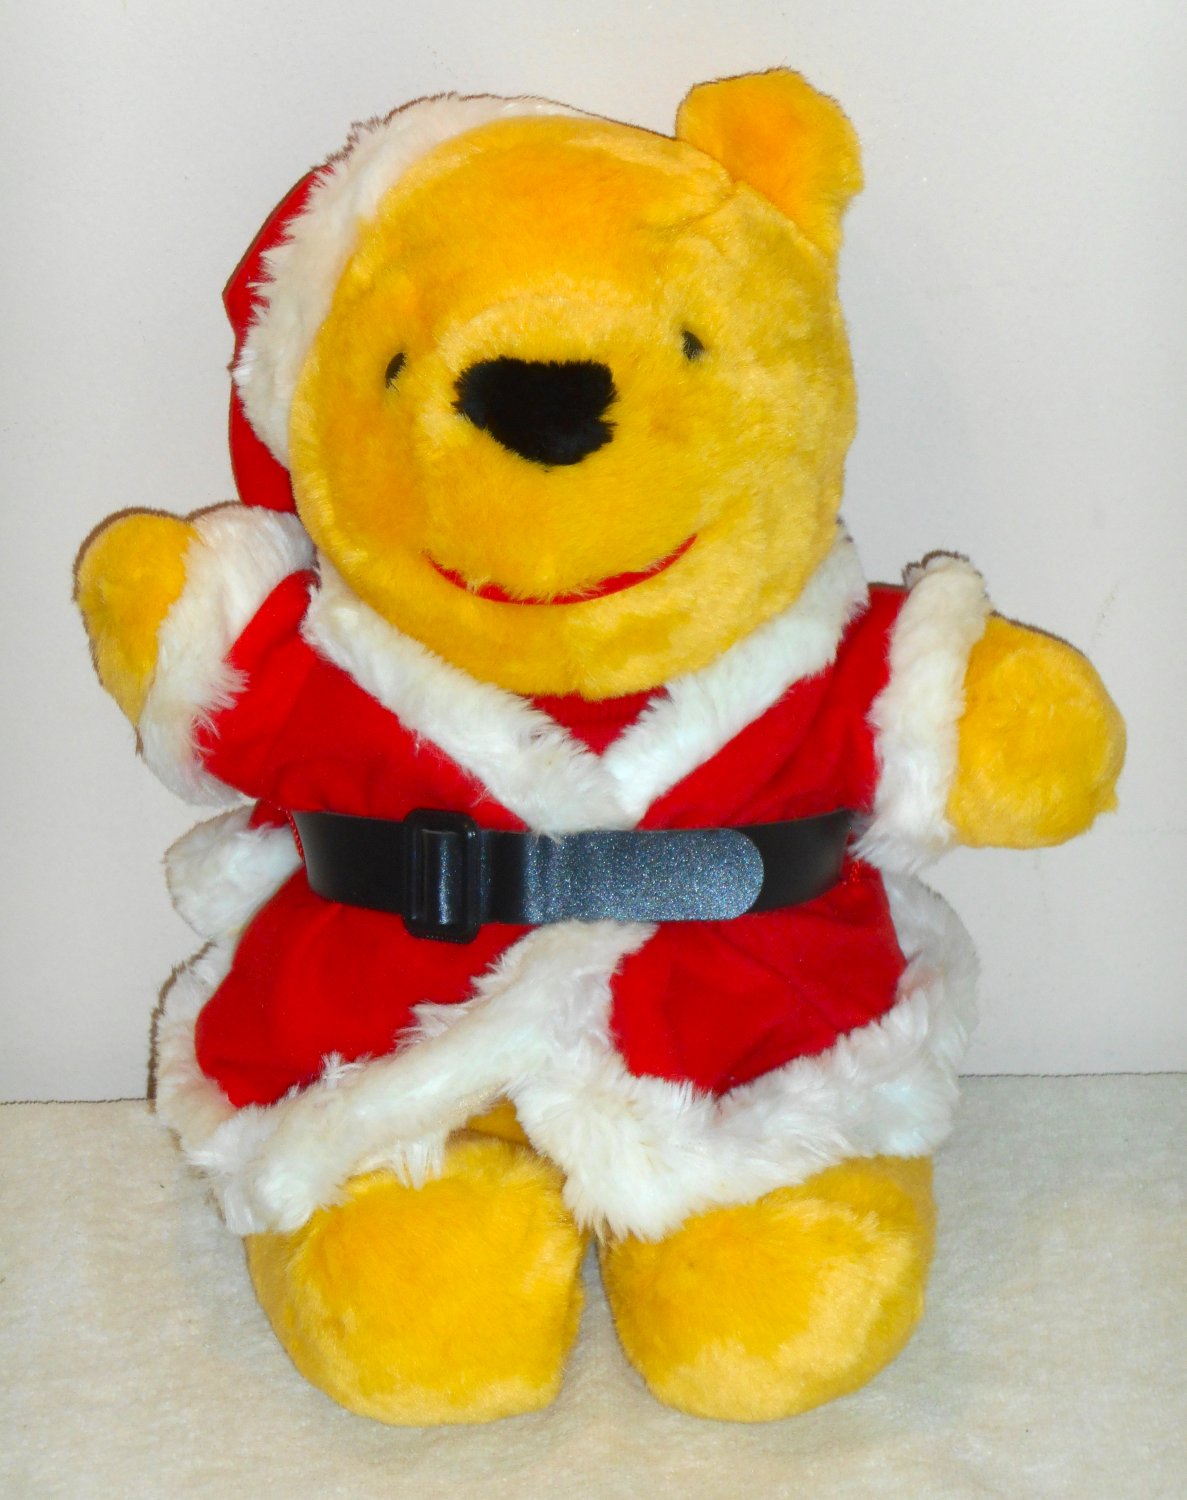 Disney Winnie the Pooh Santa Claus 16 Inch Plush Doll Toy Sears